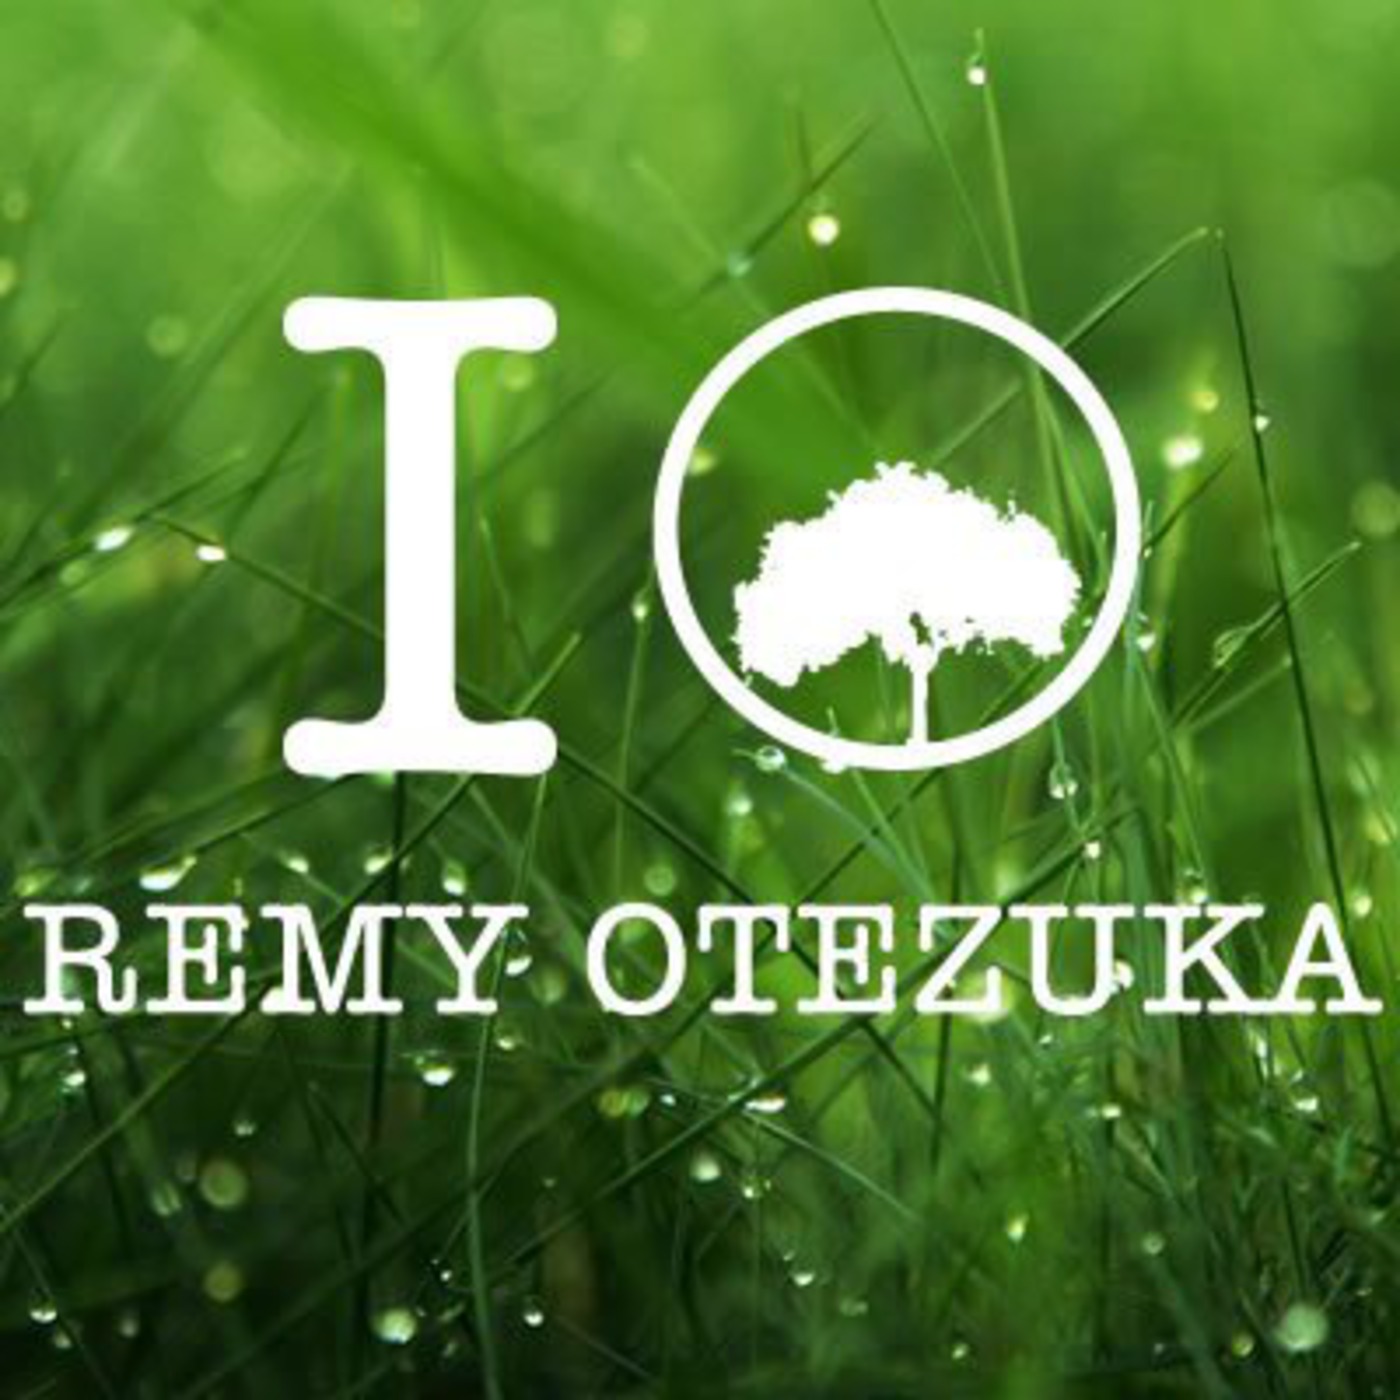 Otezuka's Podcast